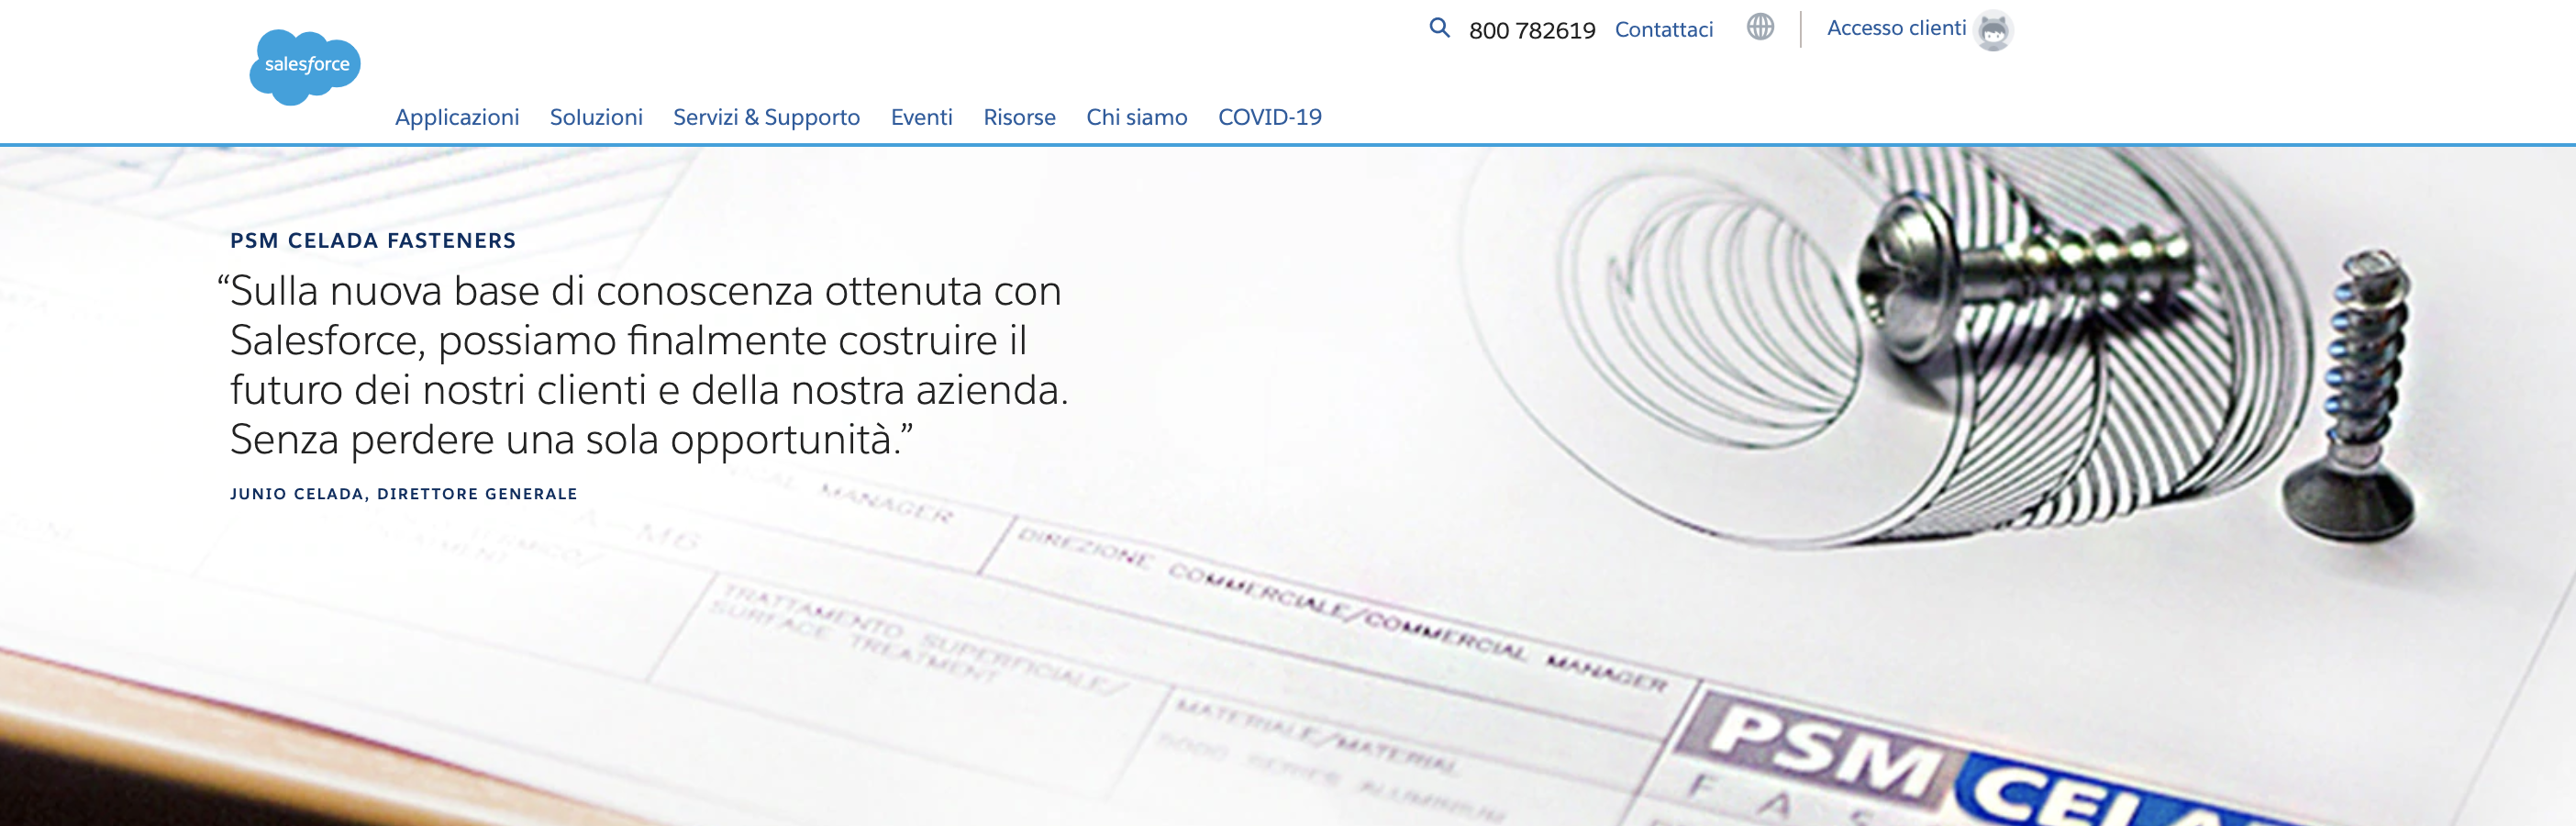 Homepage Salesforce PSM CELADA